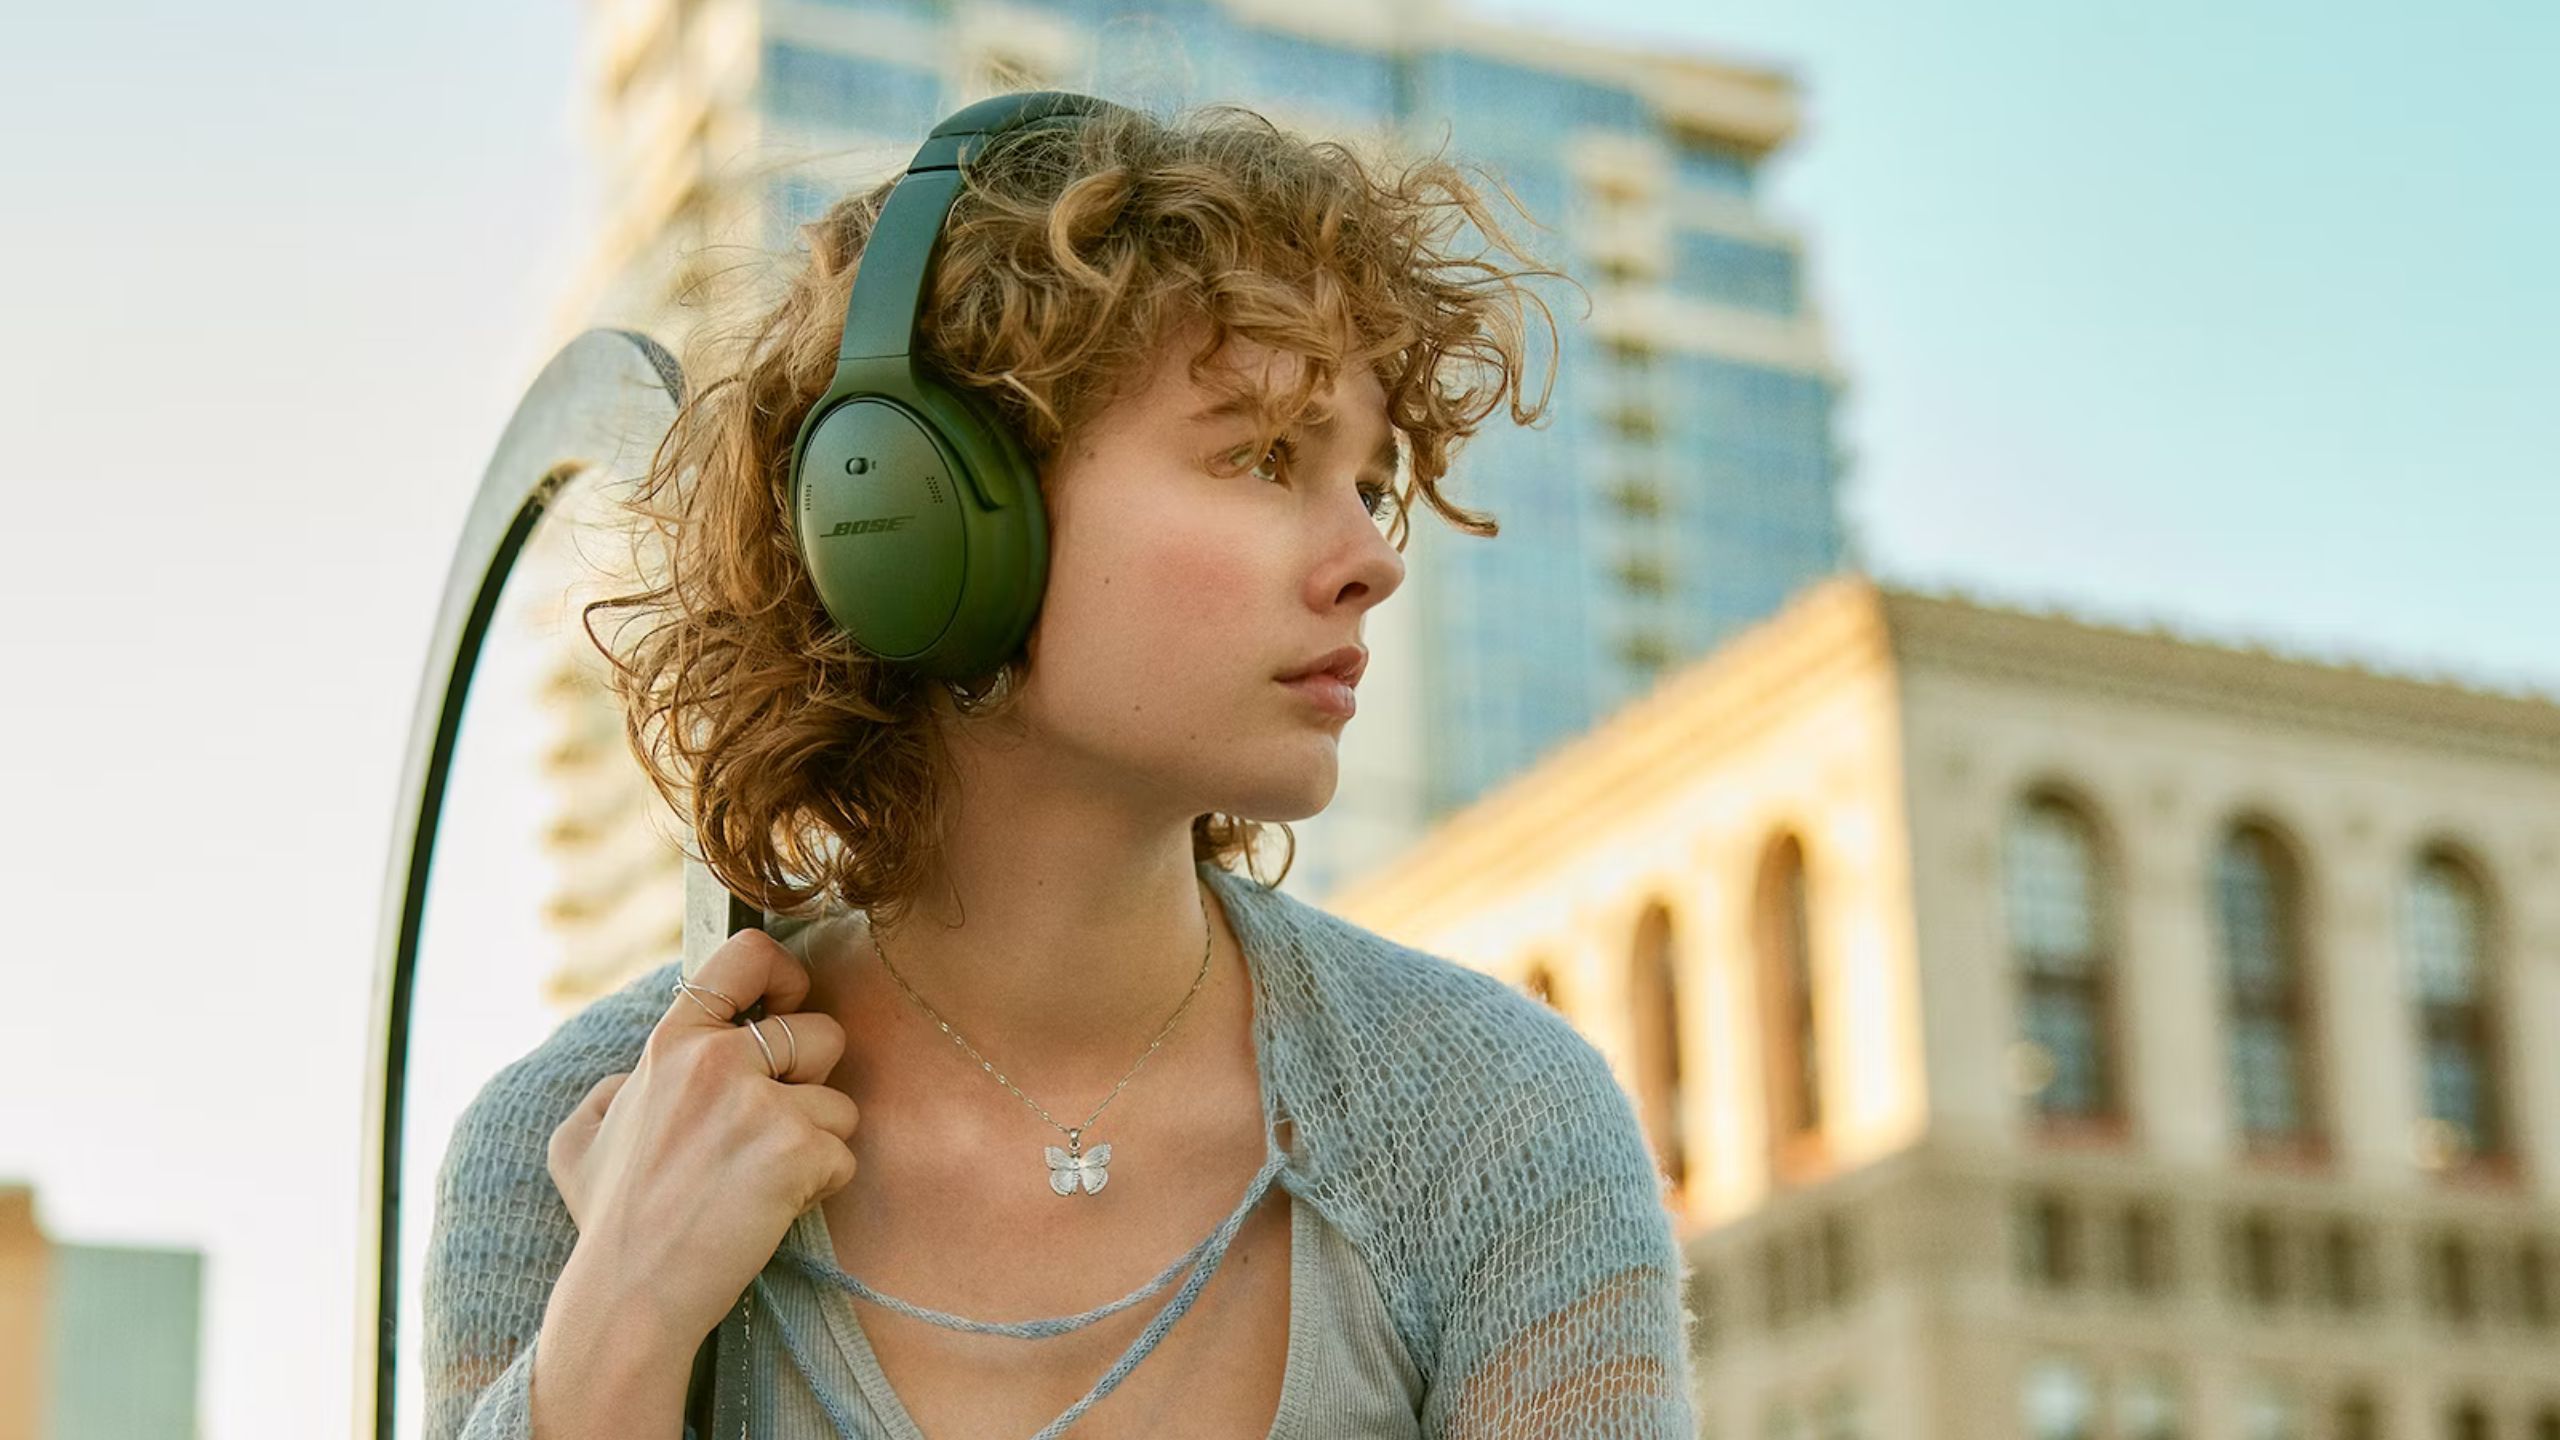 Bose Quietcomfort lifestyle image woman with green headphones